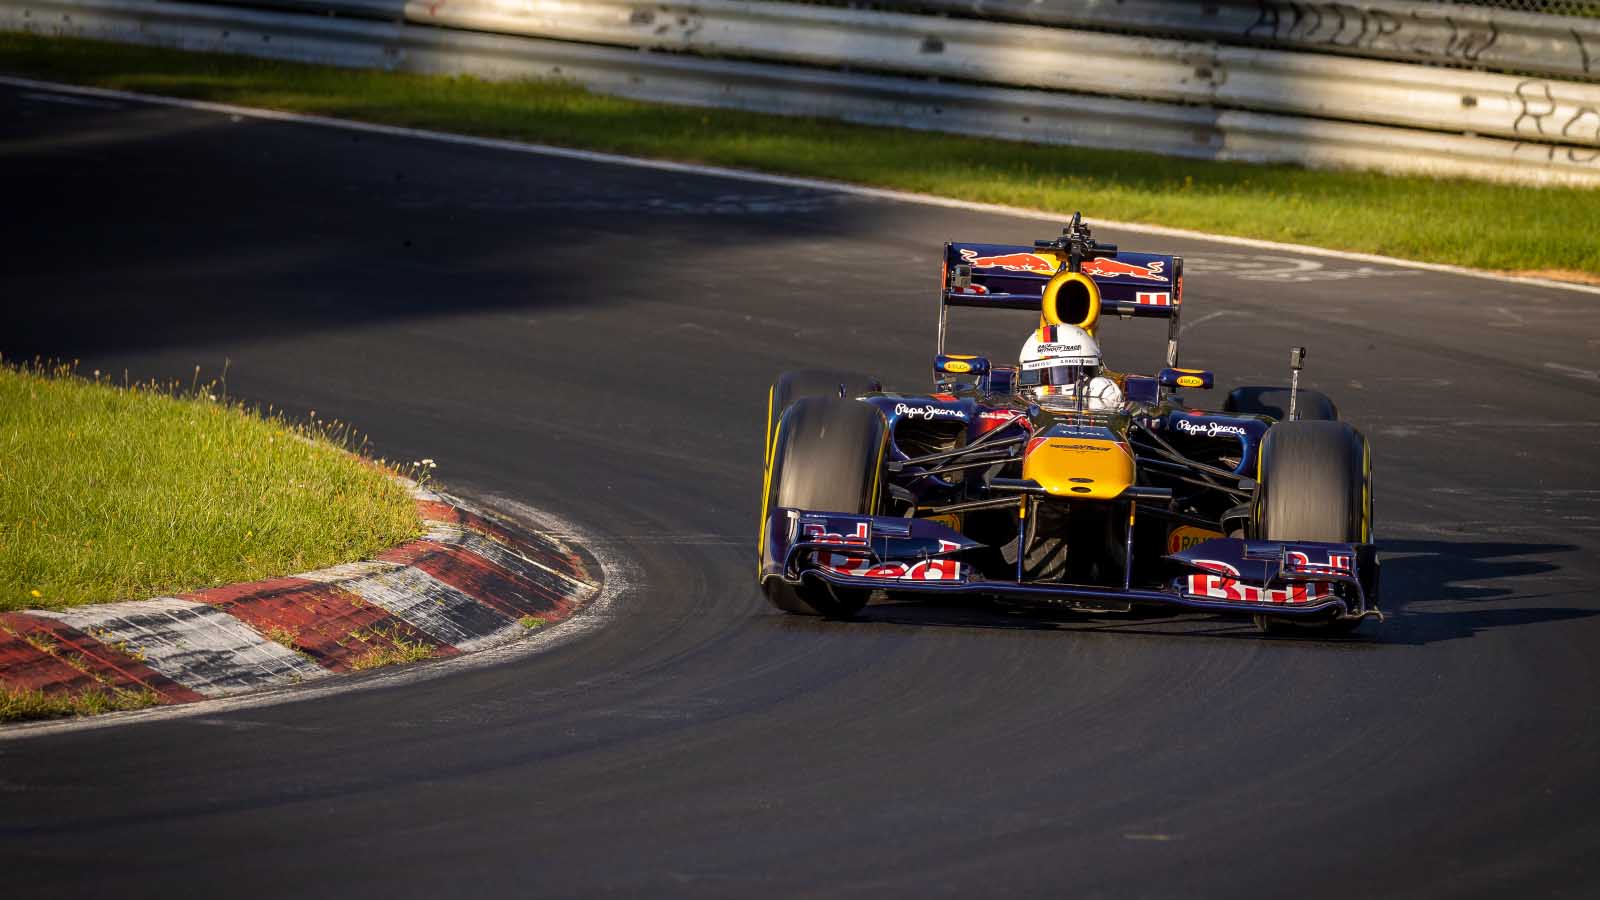 Sebastian Vettel drives the Red Bull RB7 at the Nurburgring.